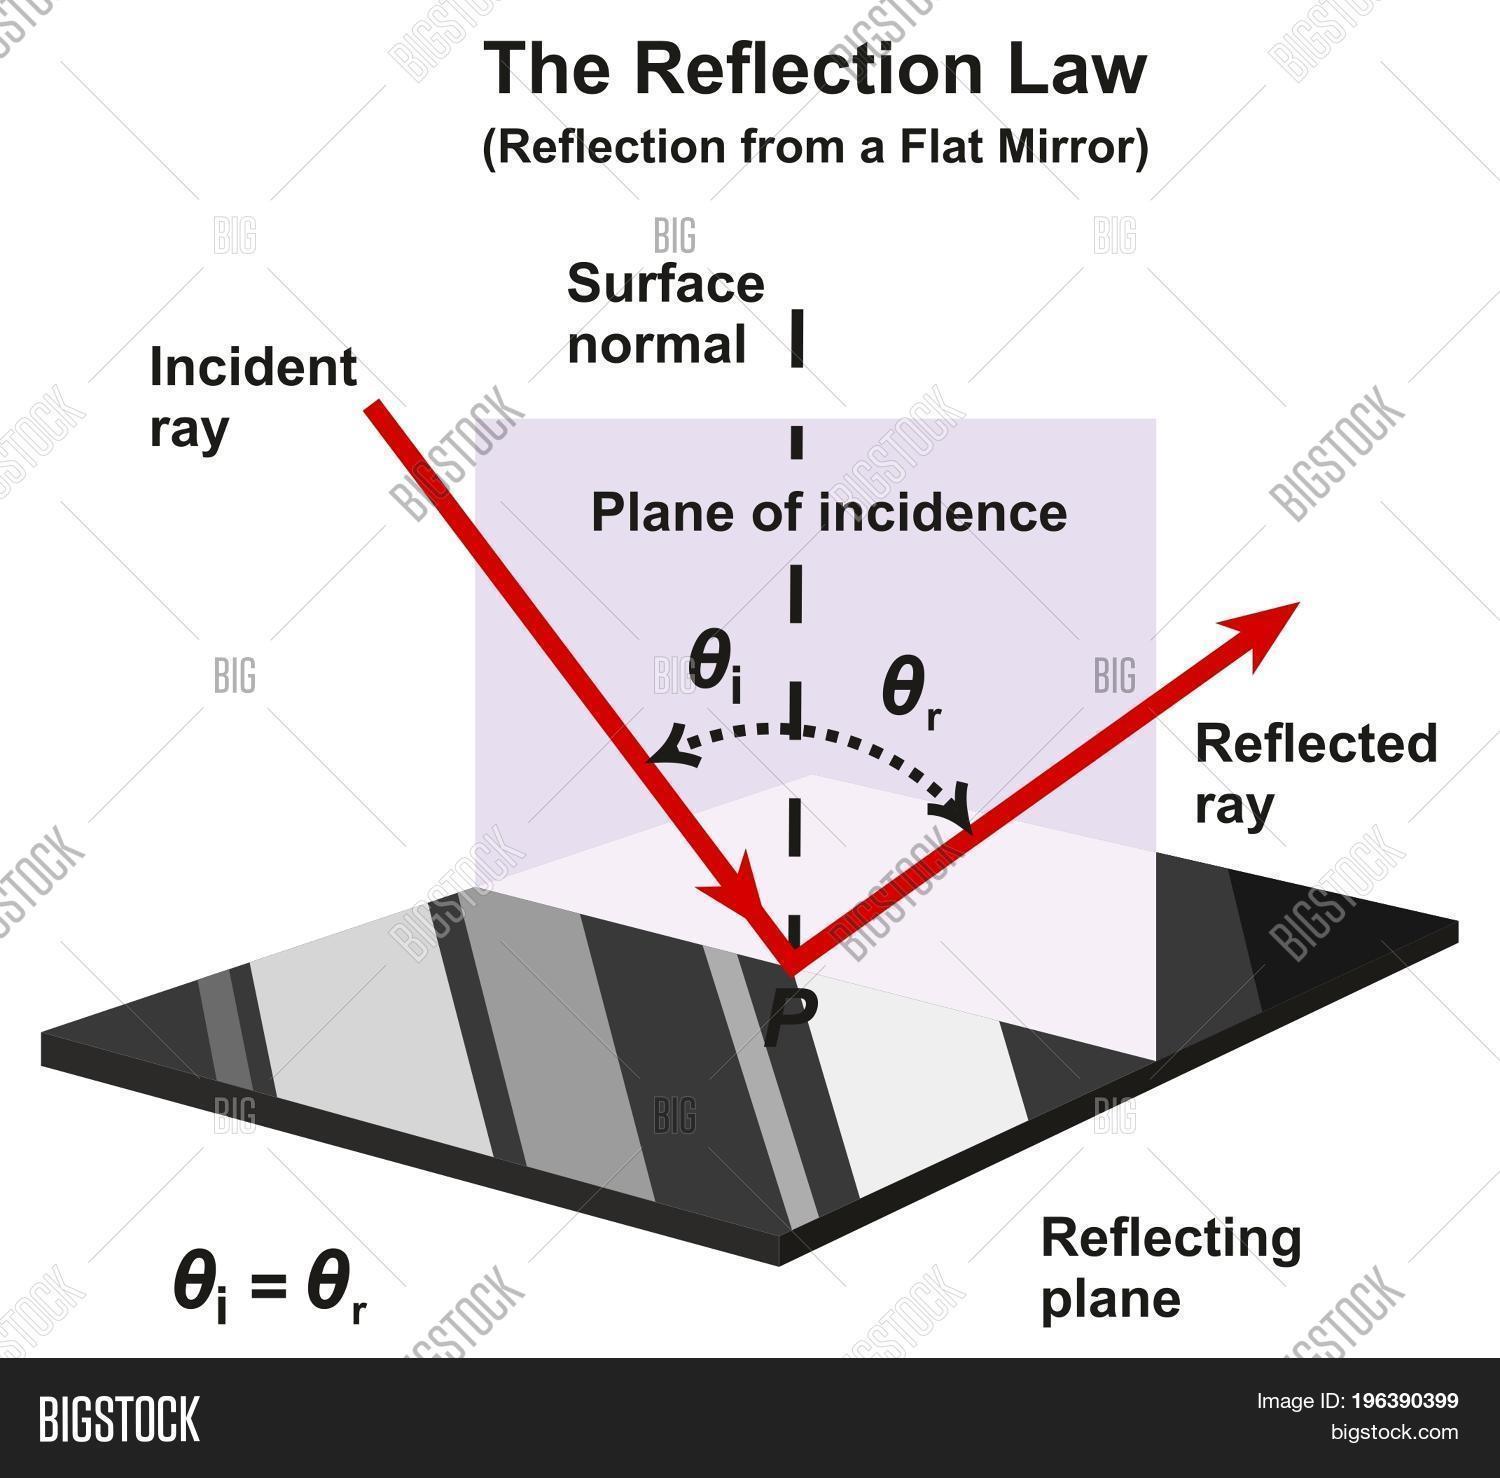 Reflection Law Infographic Diagram Image & Photo | Bigstock